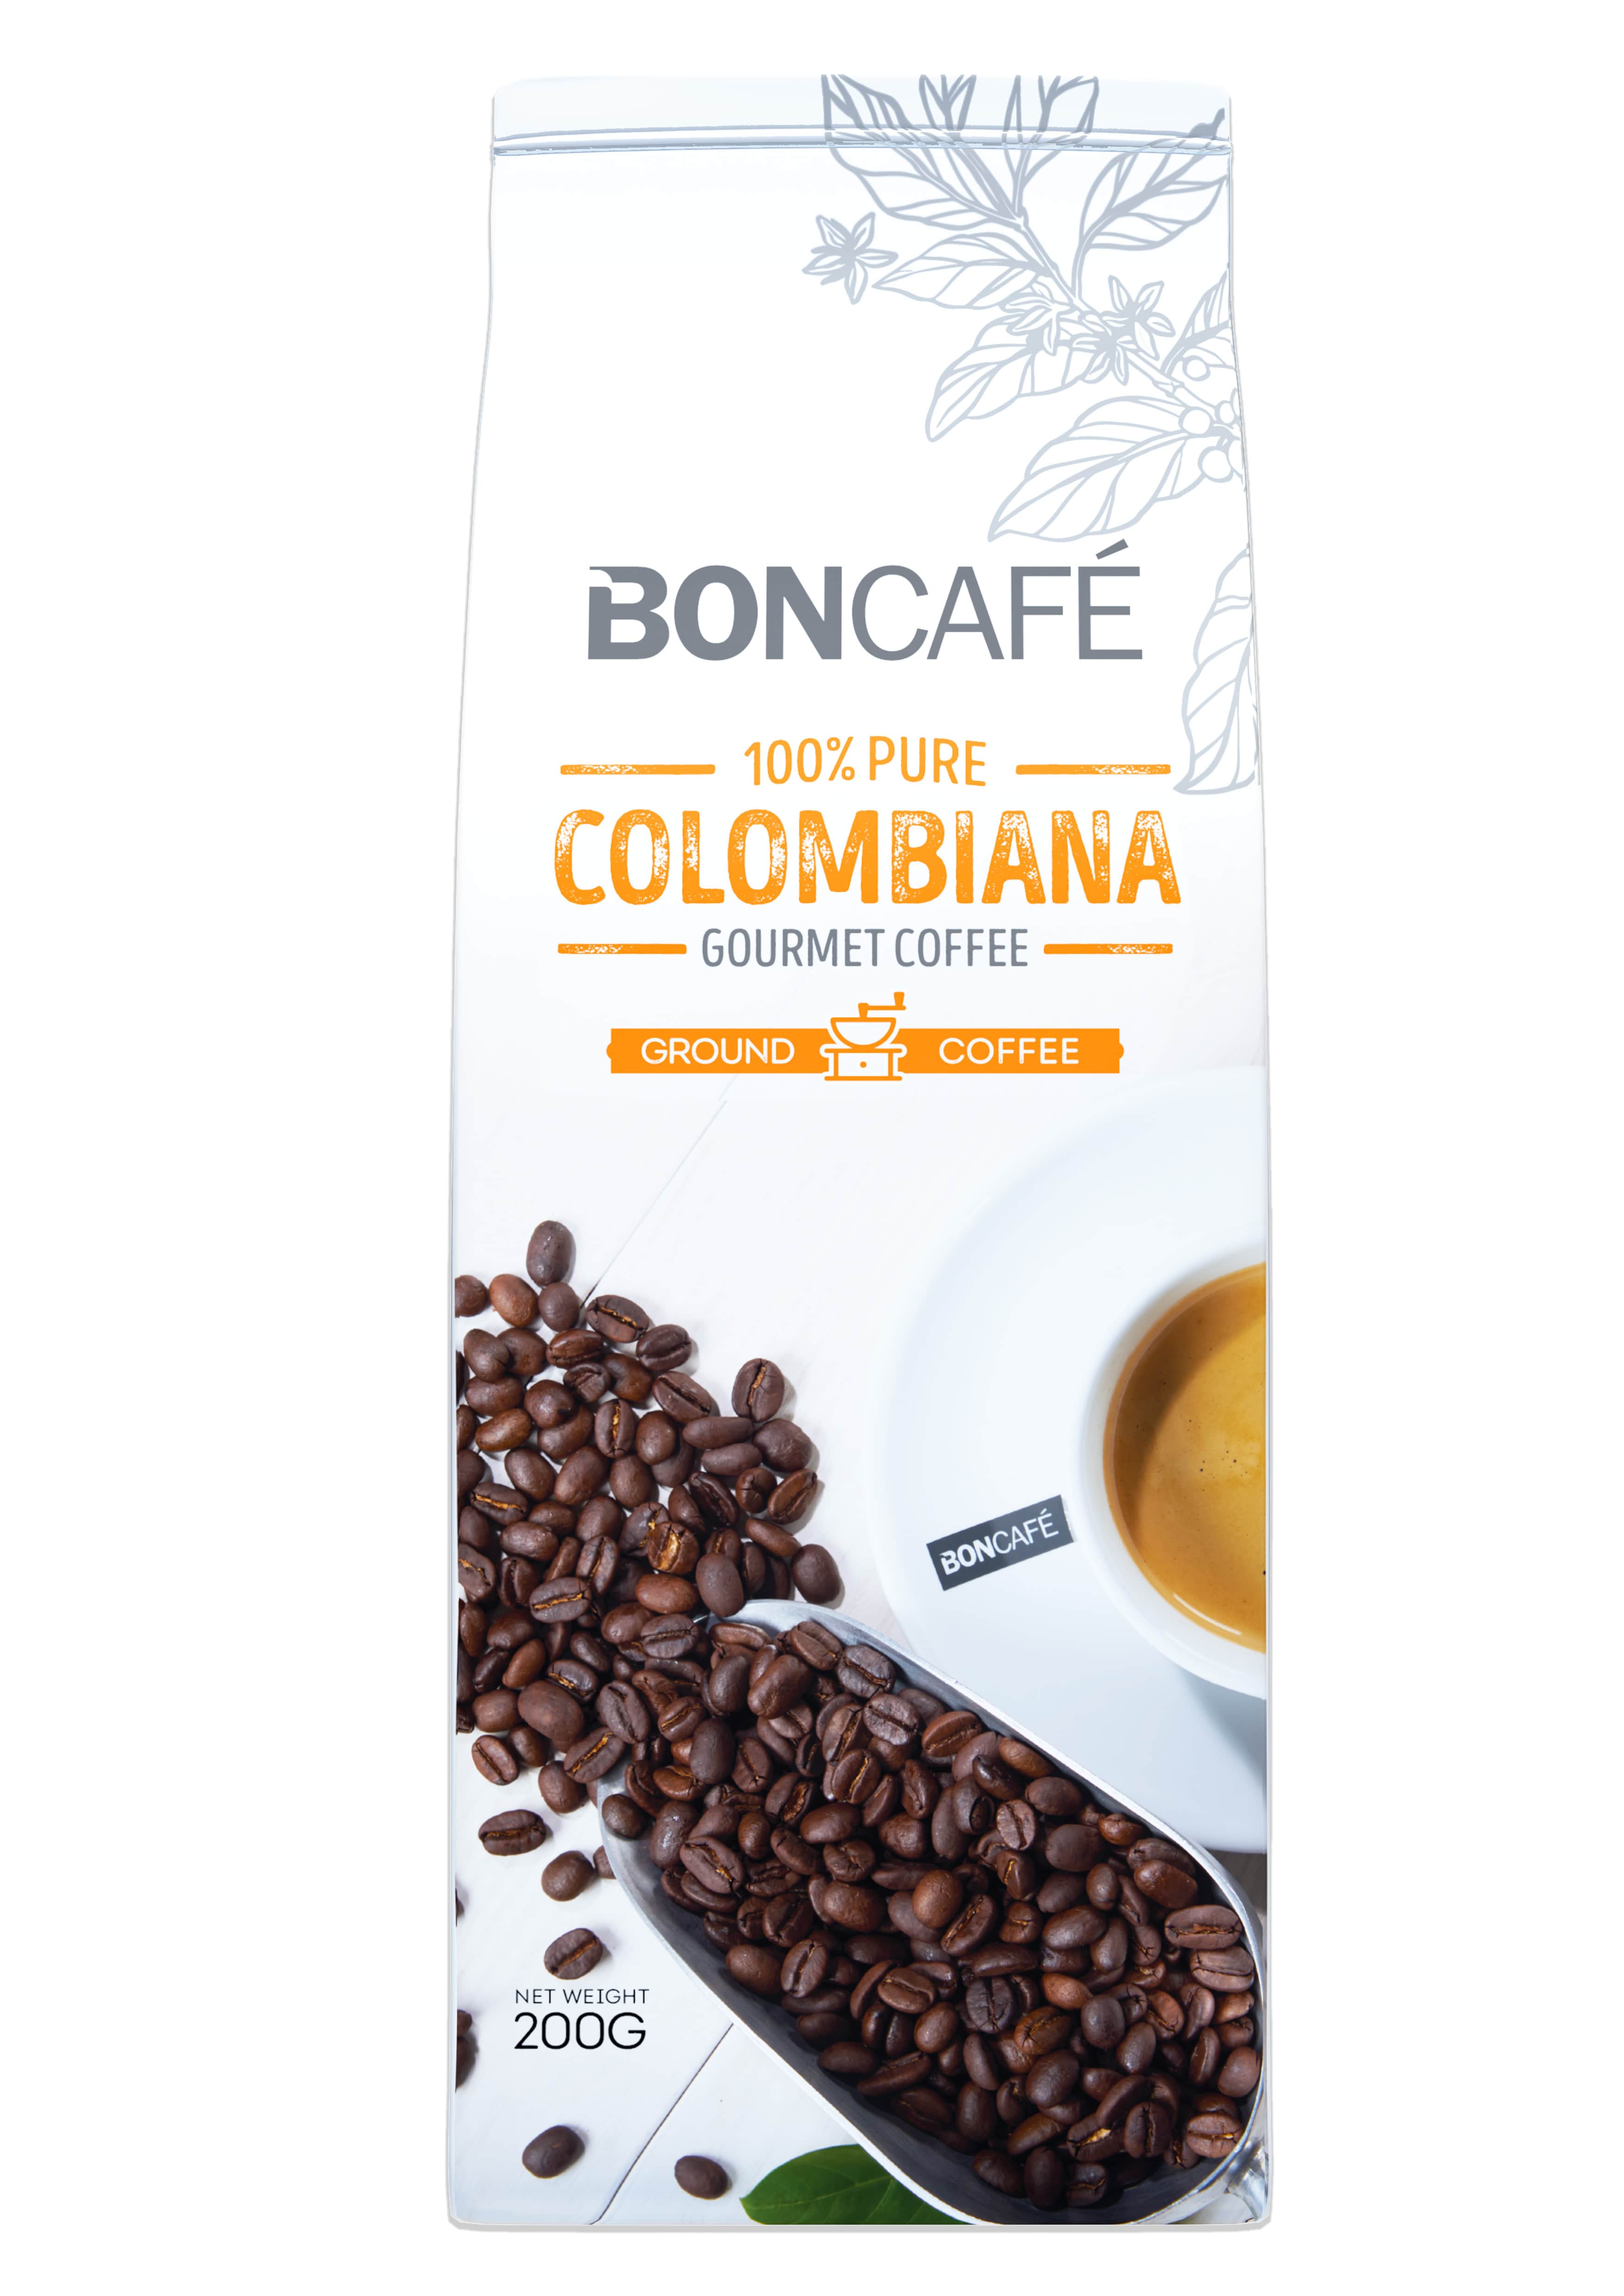 BONCAFÉ - GOURMET COLLECTION COFFEE BEAN: COLOMBIANA BLEND